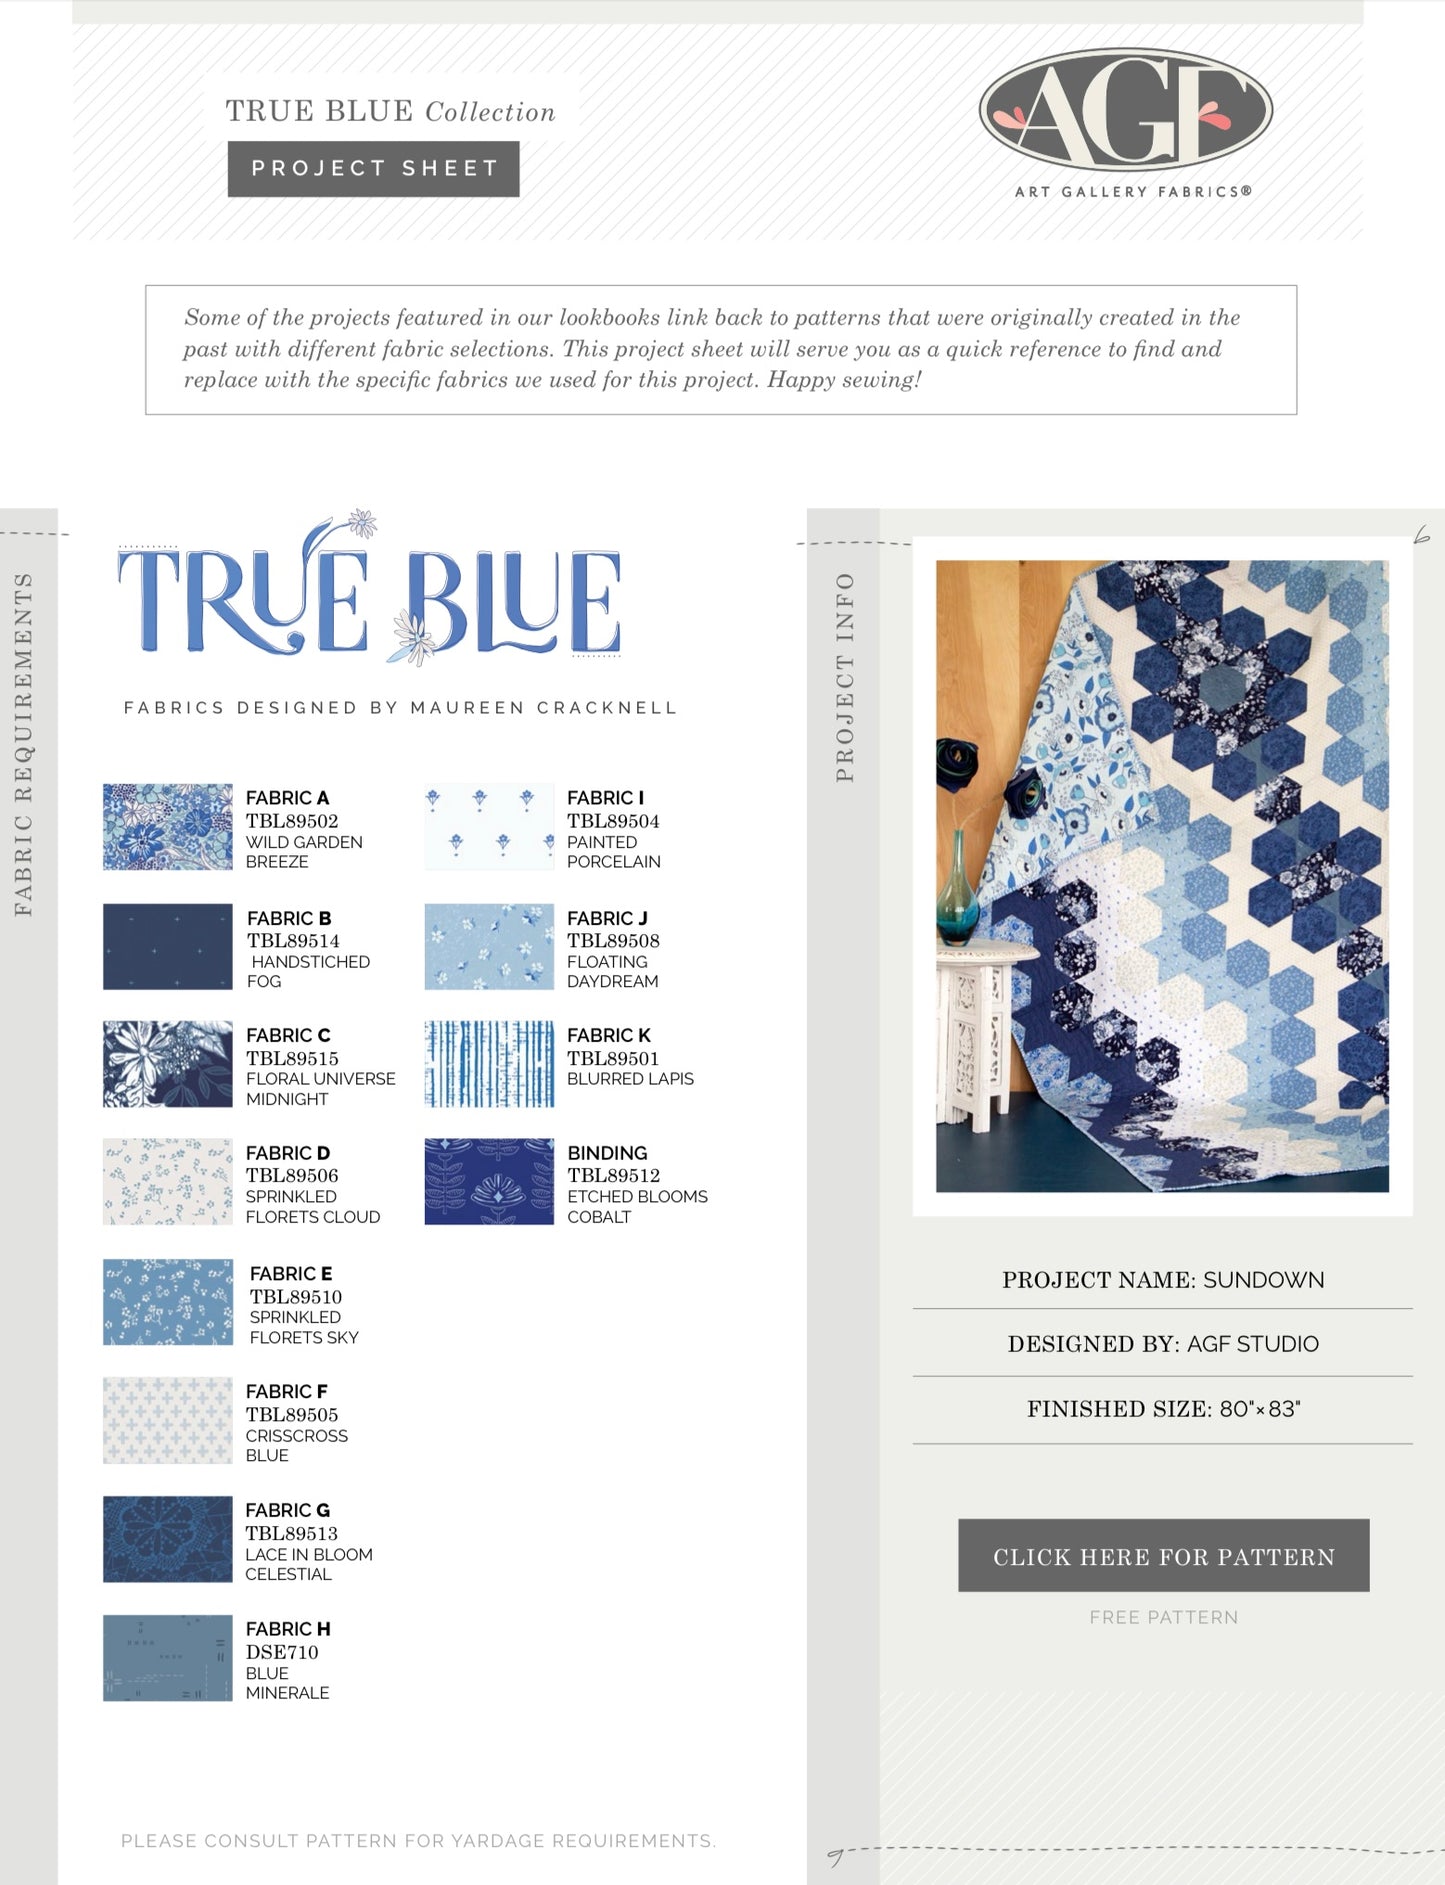 Sundown Free Pattern featuring True Blue by Maureen Cracknell